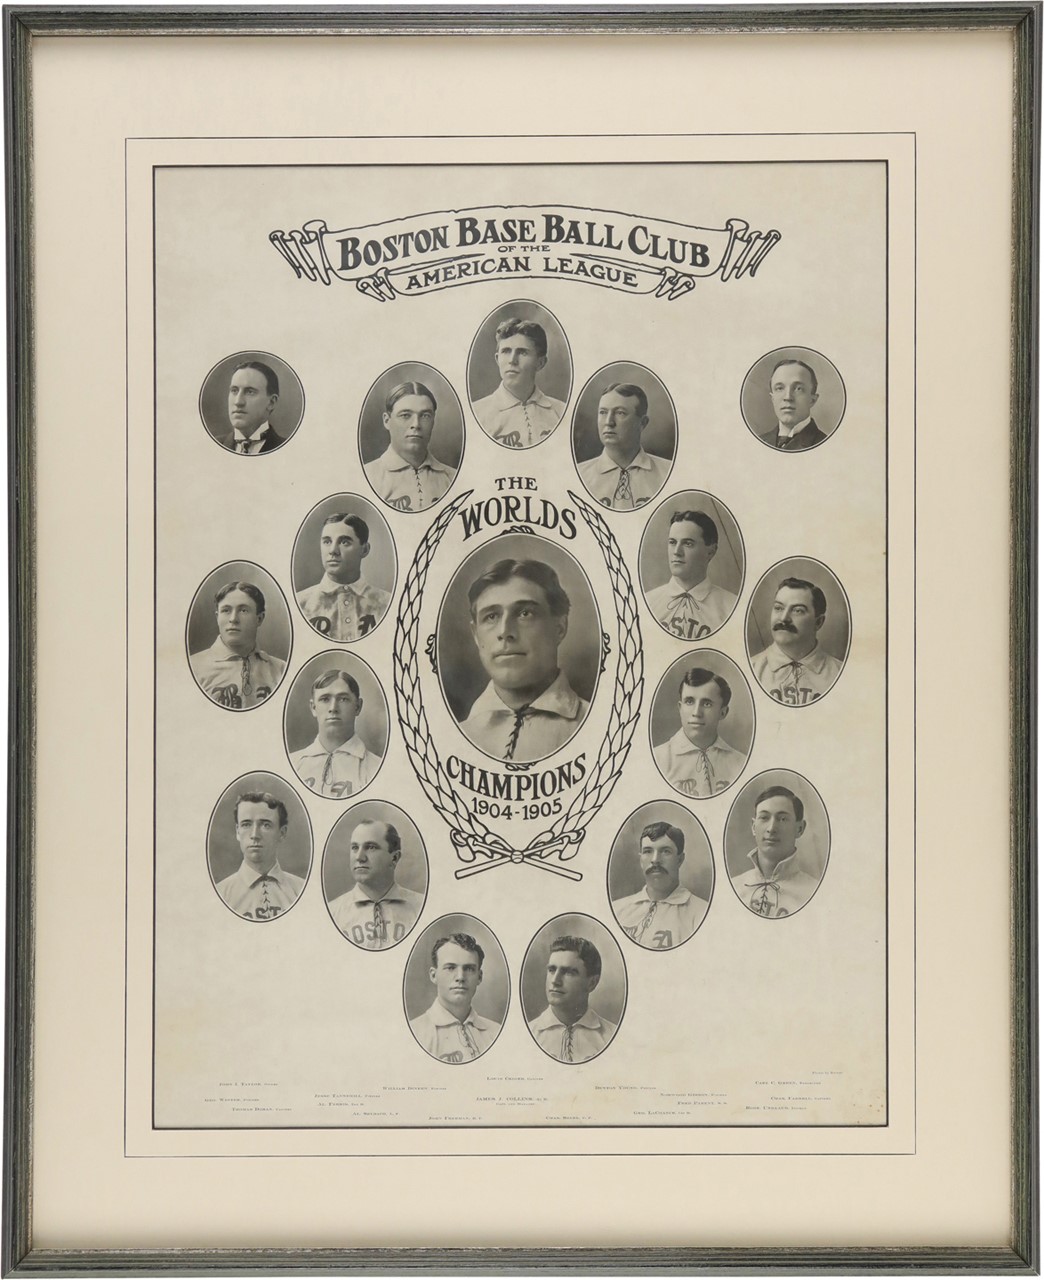 Vintage Sports Photographs - 1904-1905 Boston Baseball Club Team Composite Print by Carl Horner